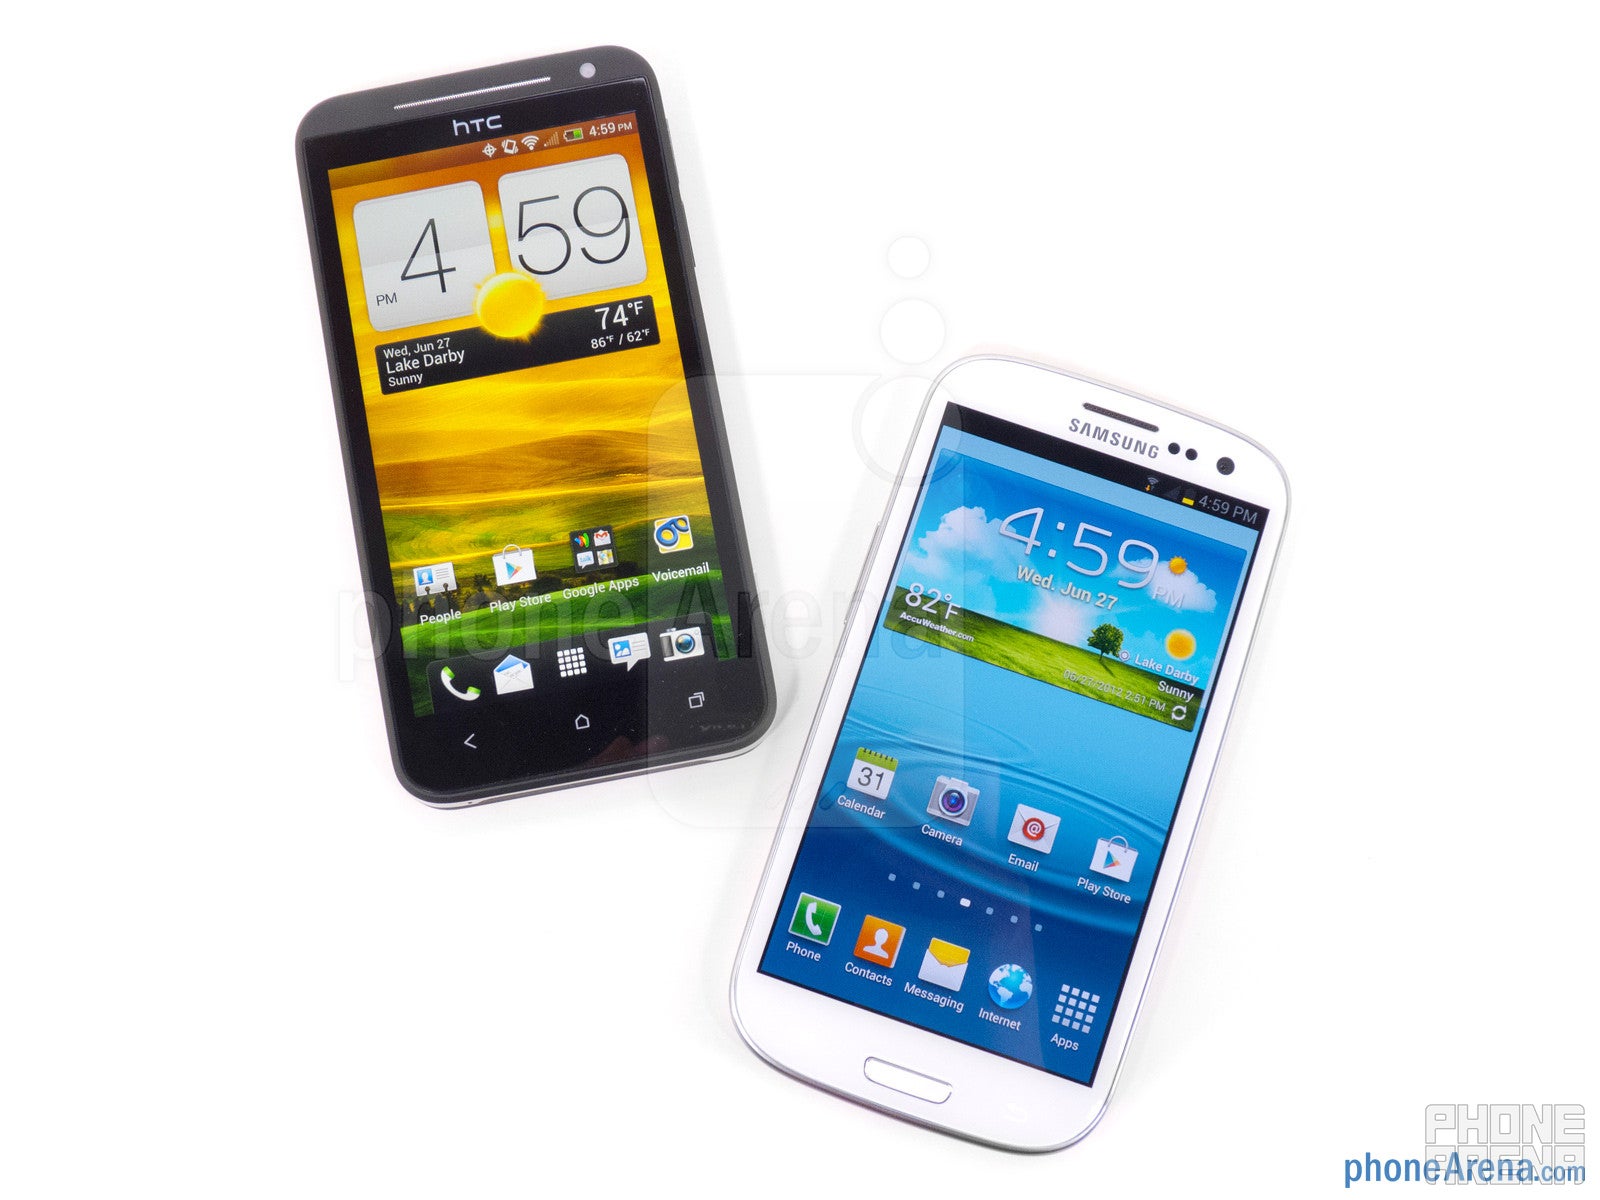 Samsung Galaxy S III vs HTC EVO 4G LTE